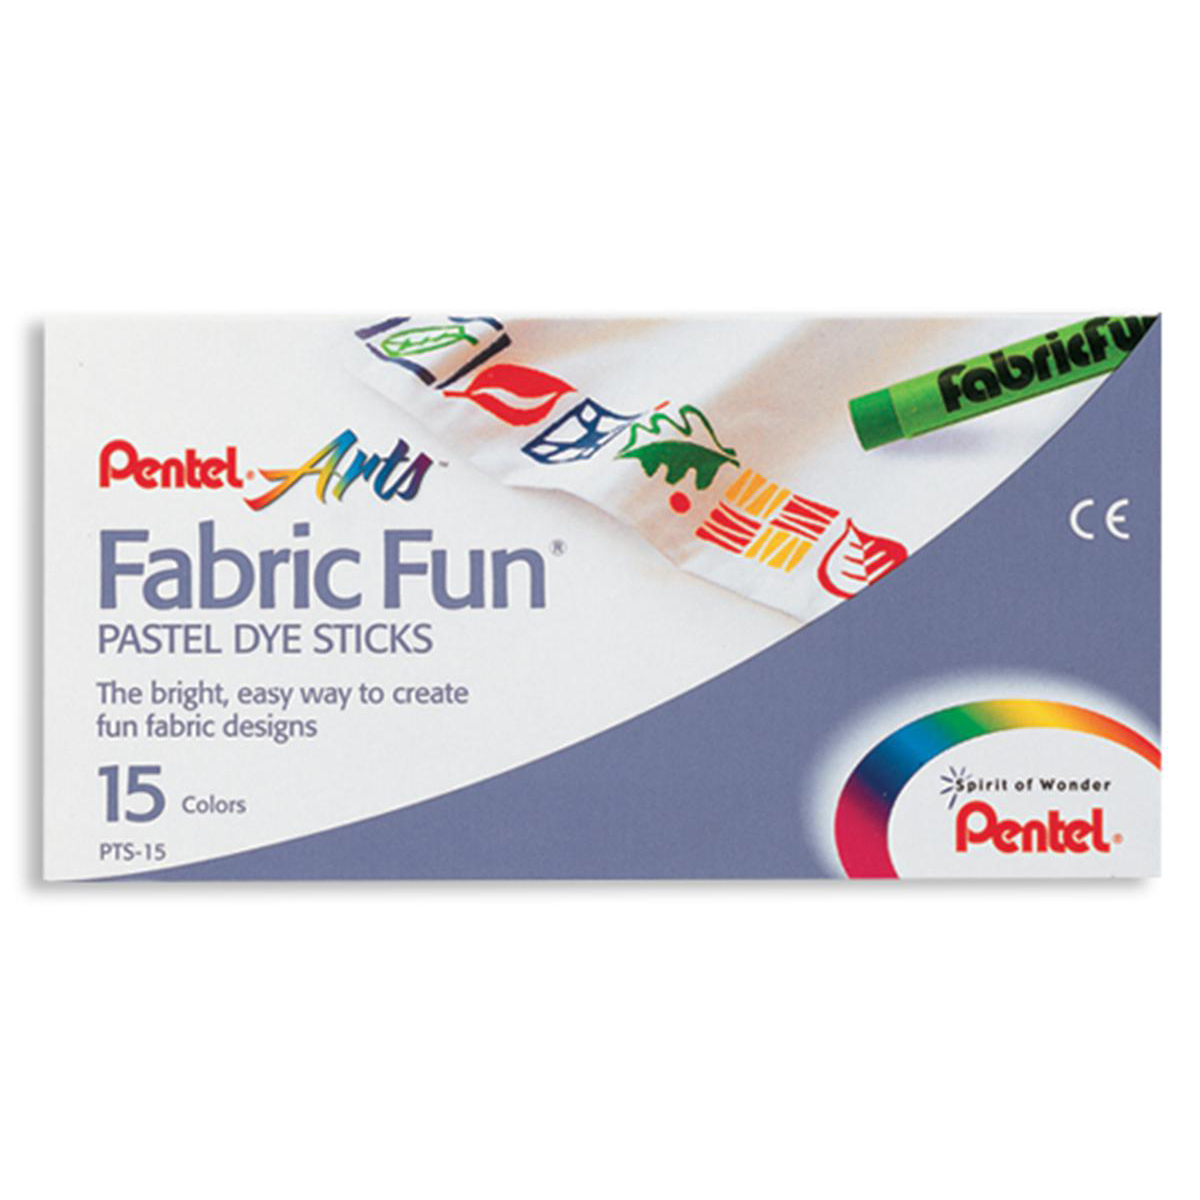  Fabric Fun Pastel Dye Sticks 